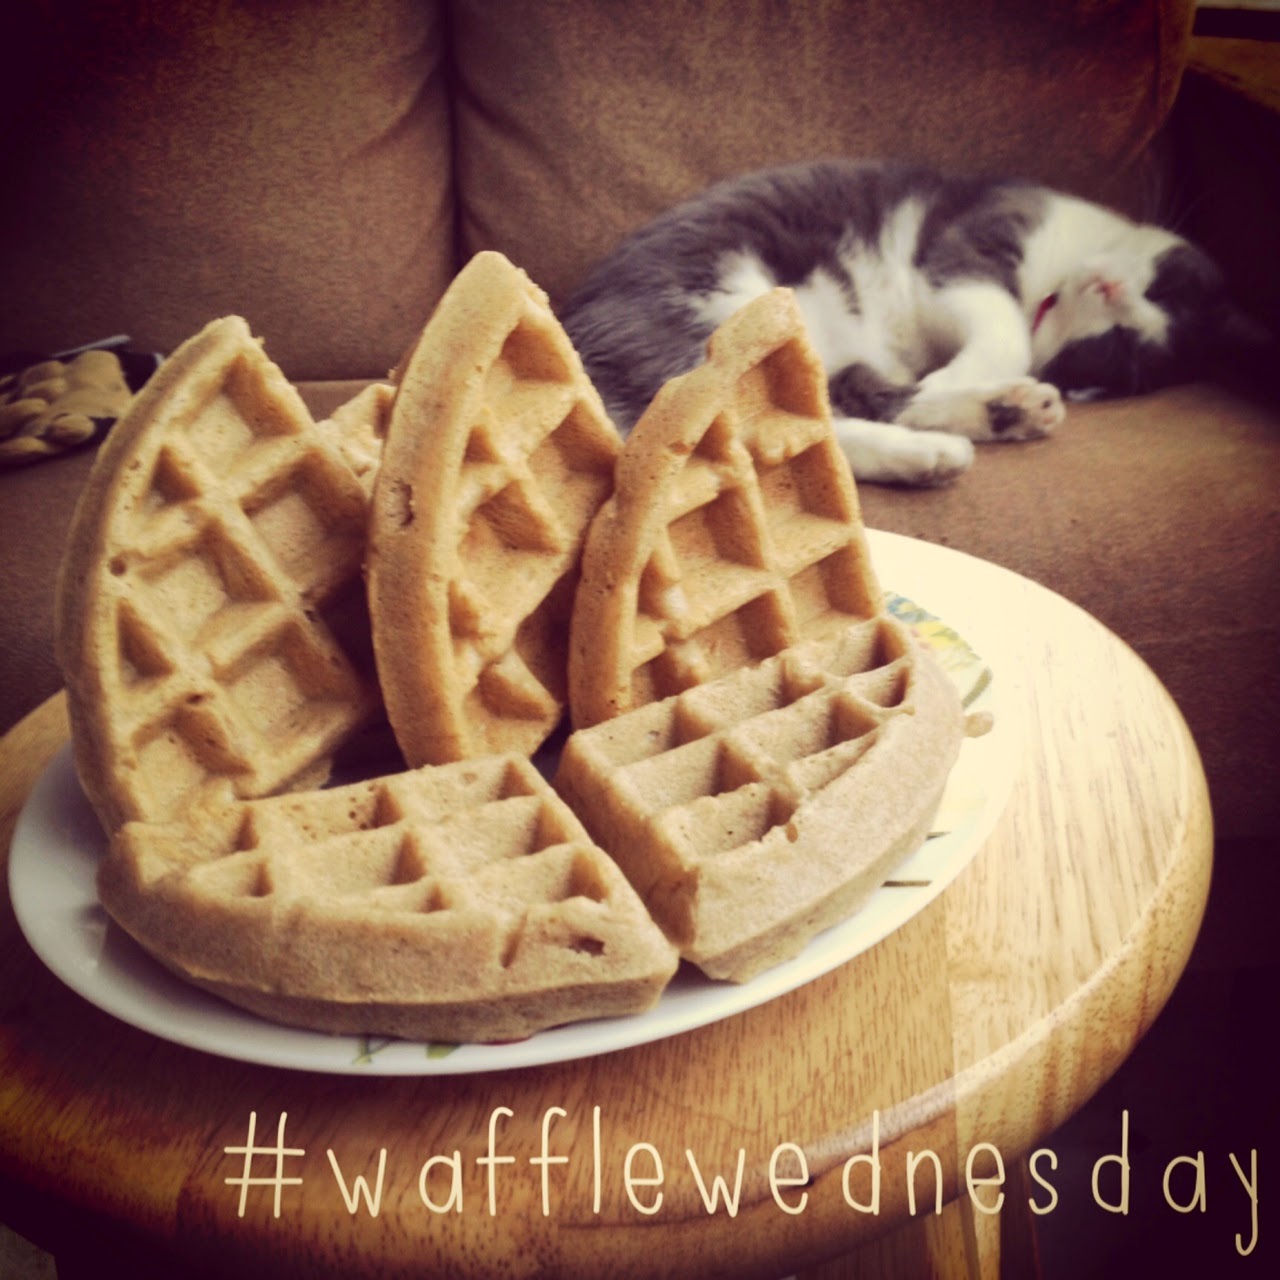 waffle Wednesday, gluten free waffles